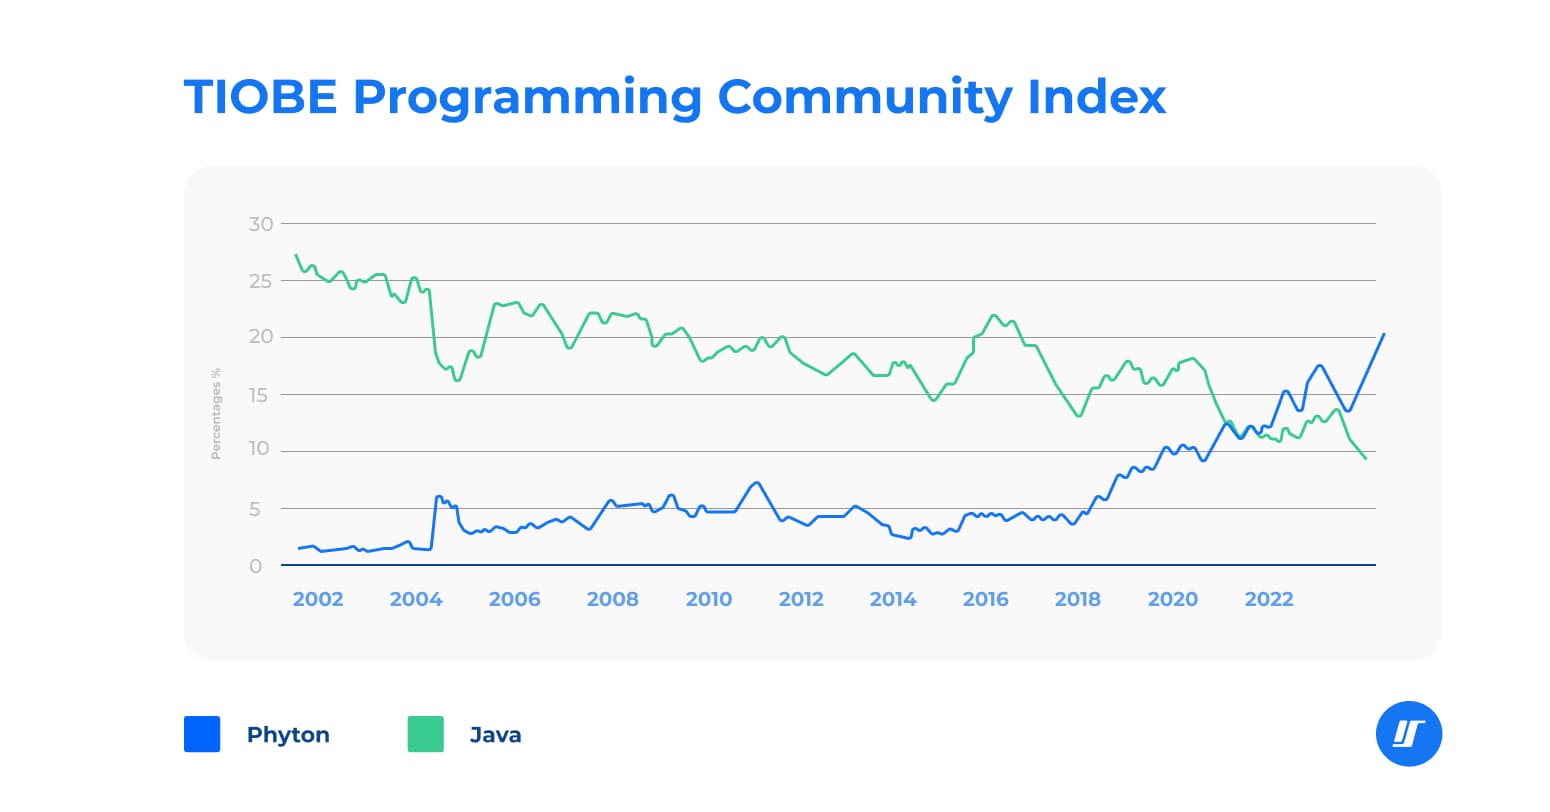 TIOBE programming community index chart for Python and Java